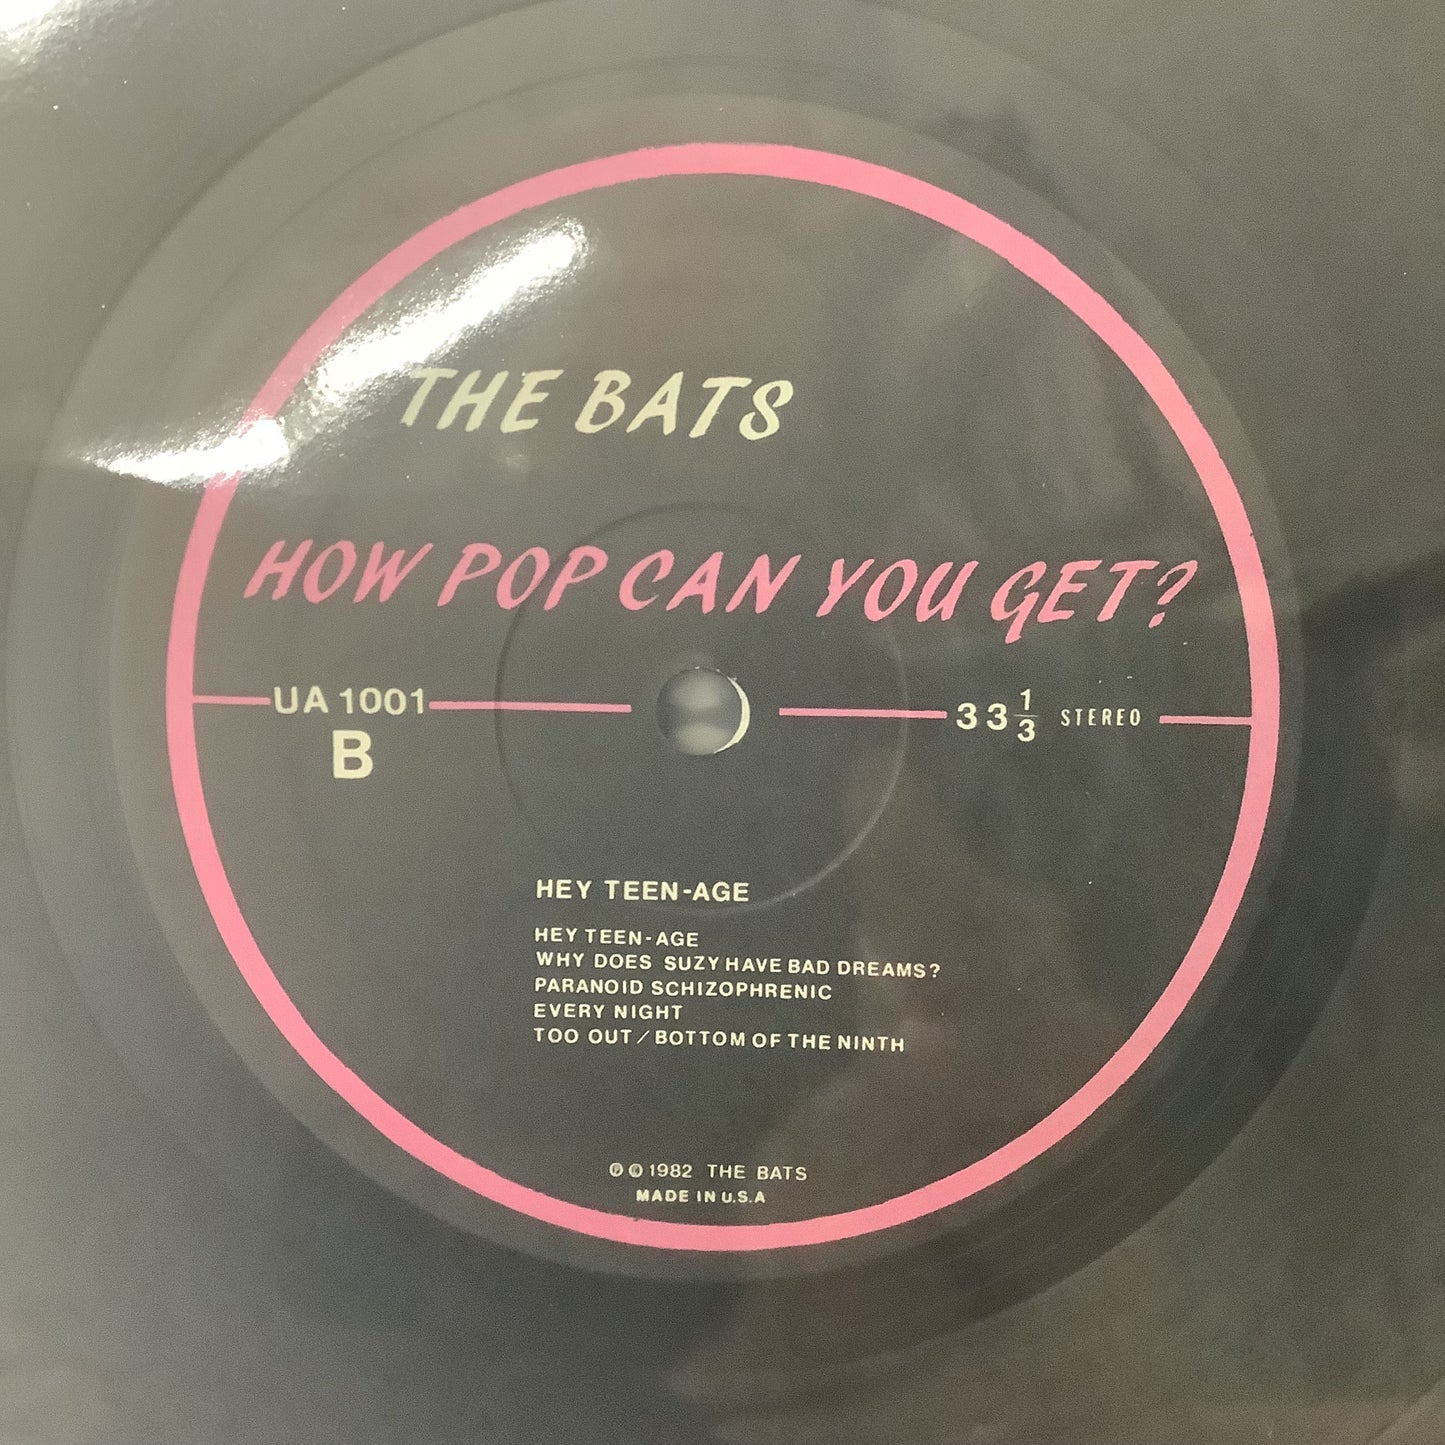 The Bats - How Pop Can You Get? - LP